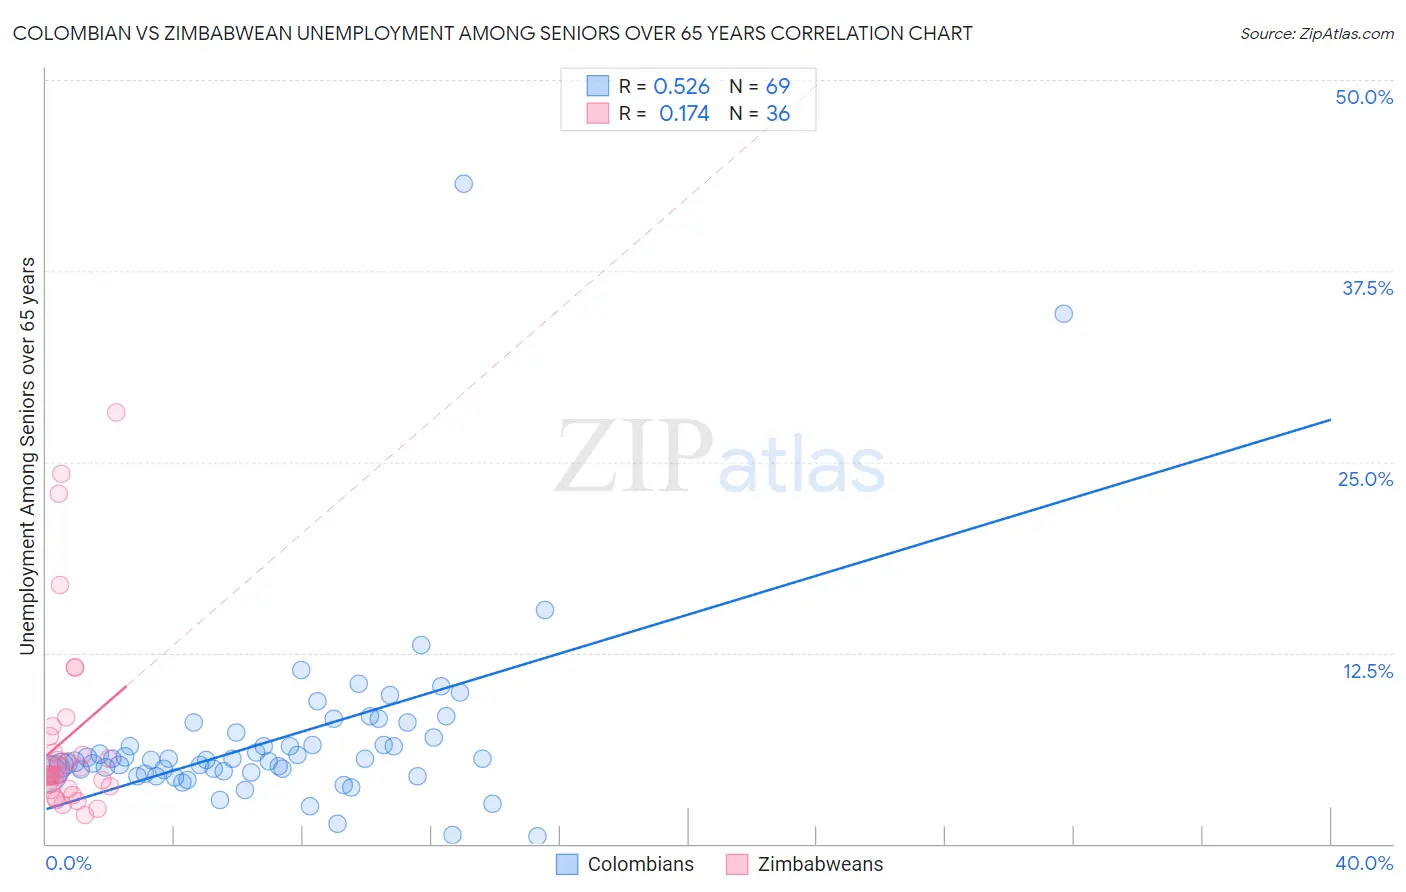 Colombian vs Zimbabwean Unemployment Among Seniors over 65 years